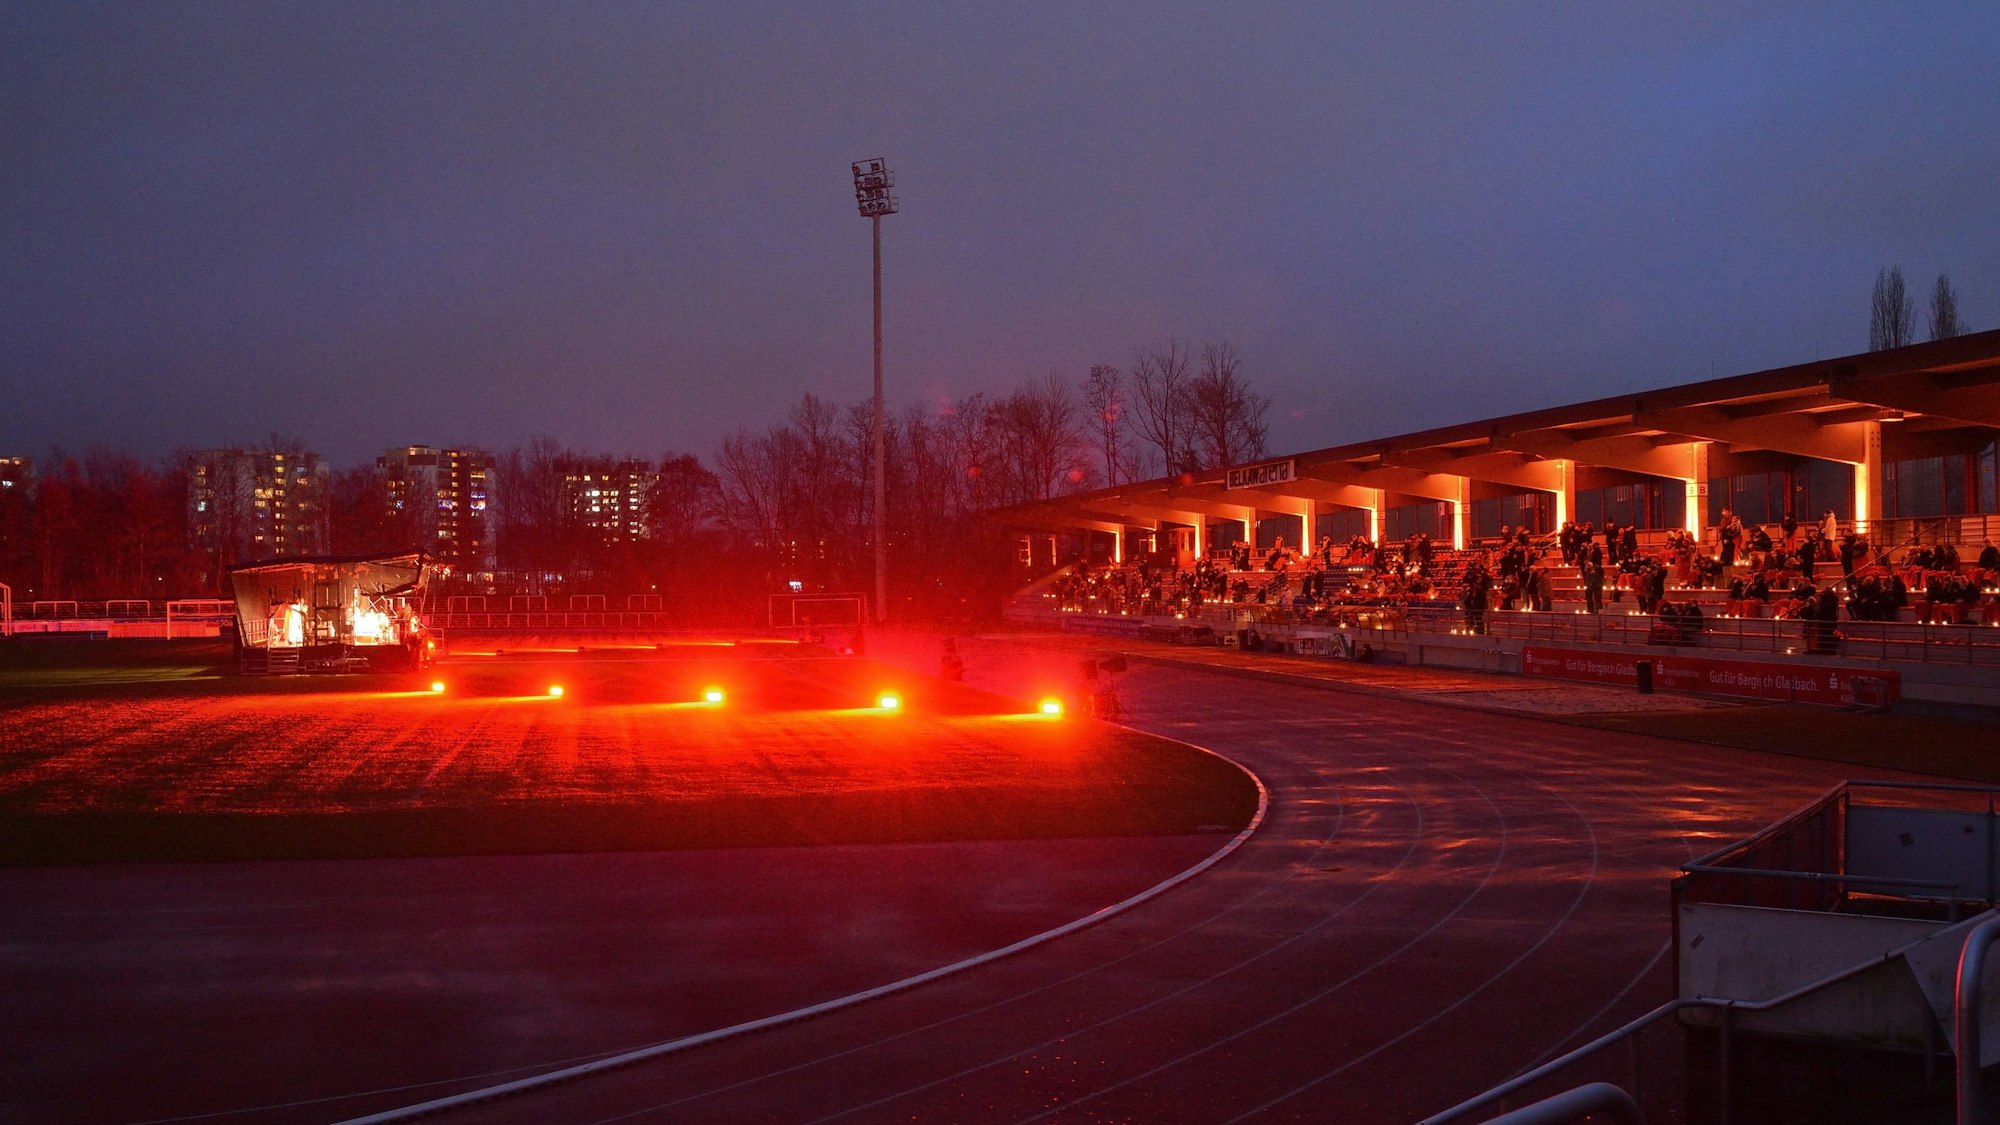 Christmette des Kreisdekanat RBK, Belkaw-Arena
